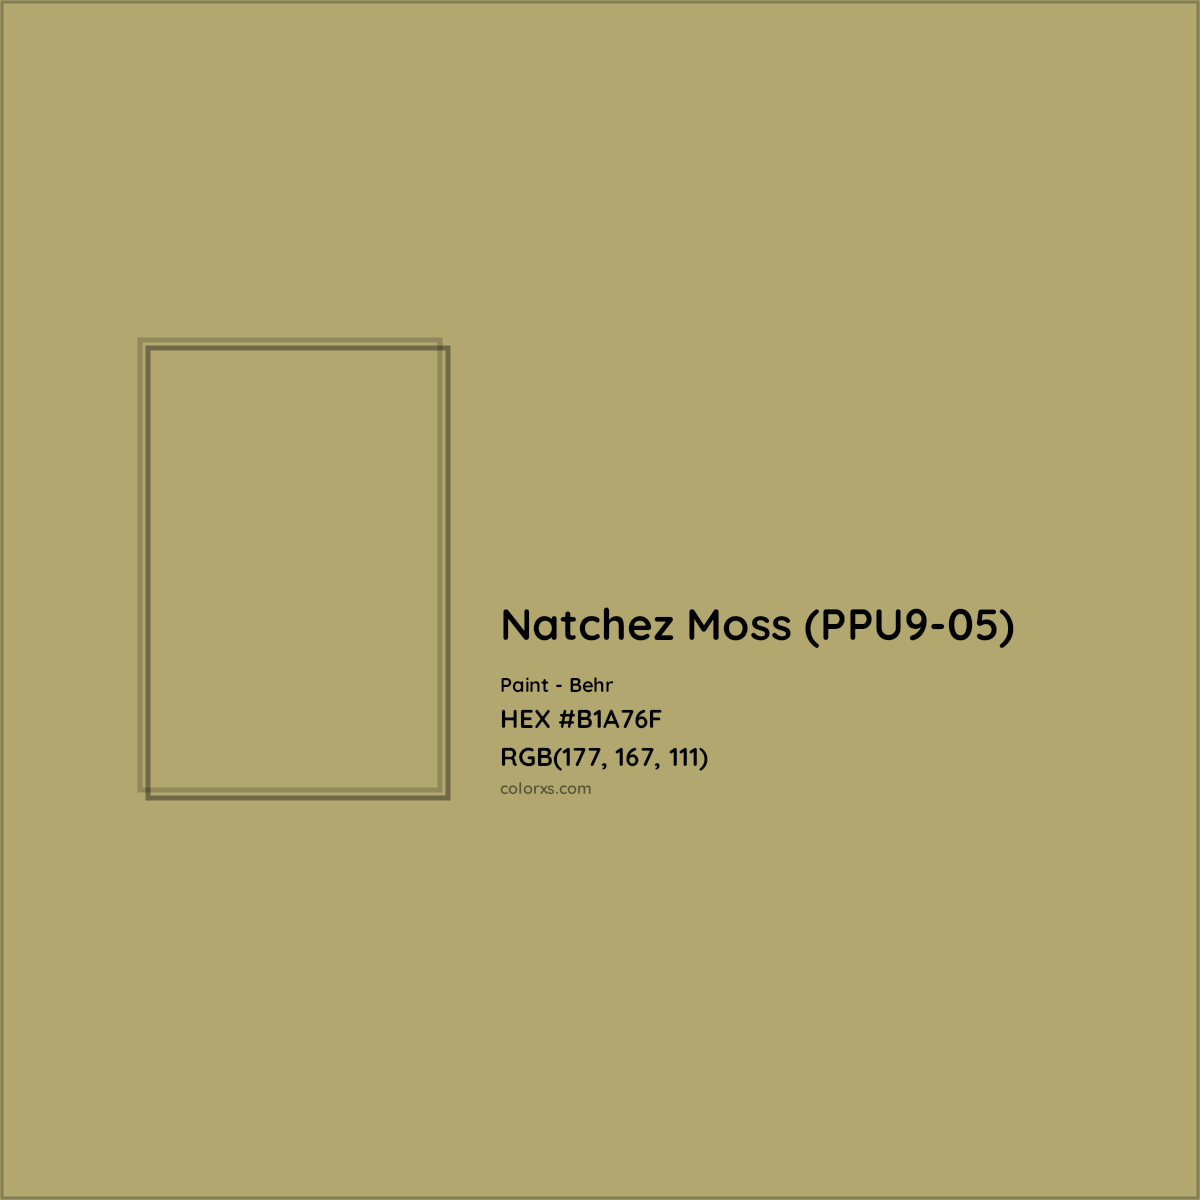 HEX #B1A76F Natchez Moss (PPU9-05) Paint Behr - Color Code